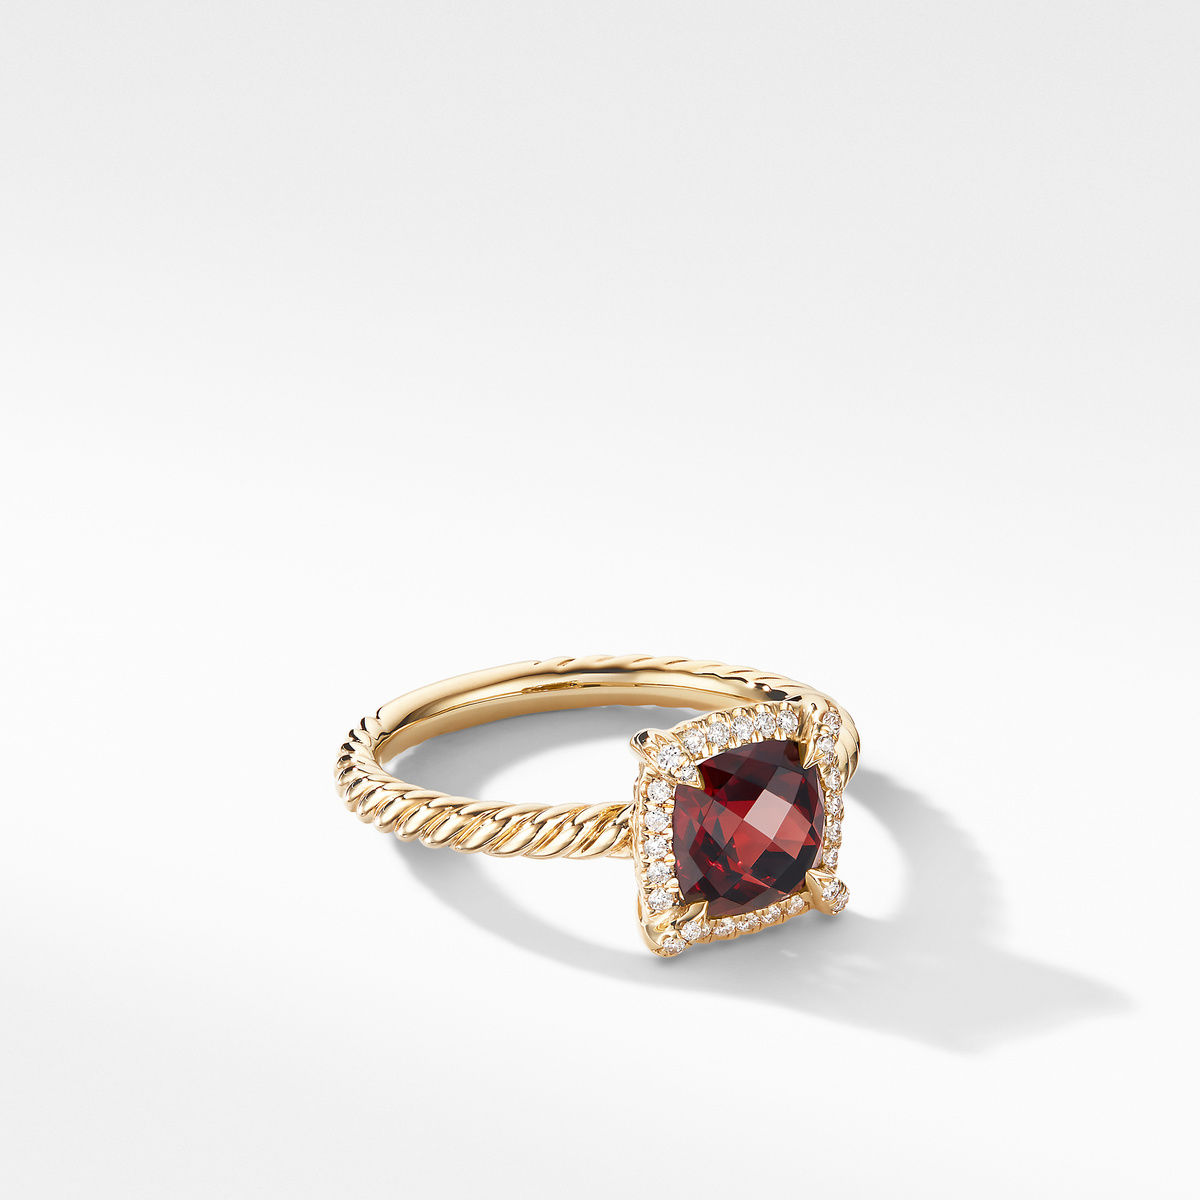 David Yurman Petite Chatelaine Pave Bezel Ring in 18K Yellow Gold with Garnet and Diamonds - Size 8